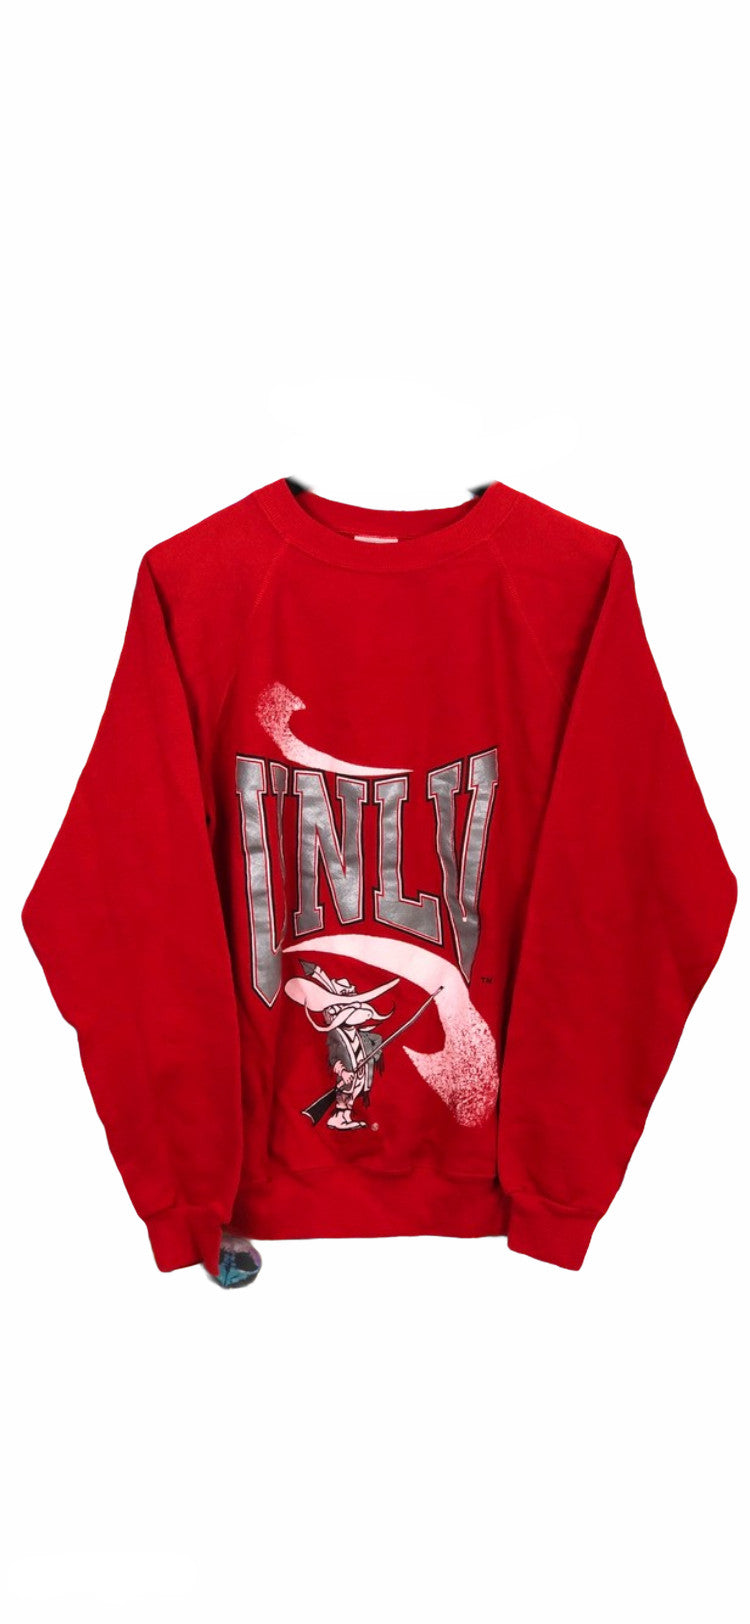 University of Nevada Las Vegas Sweater UNLV Rebels Big print red medium freeshipping - Unique Pieces Vintage